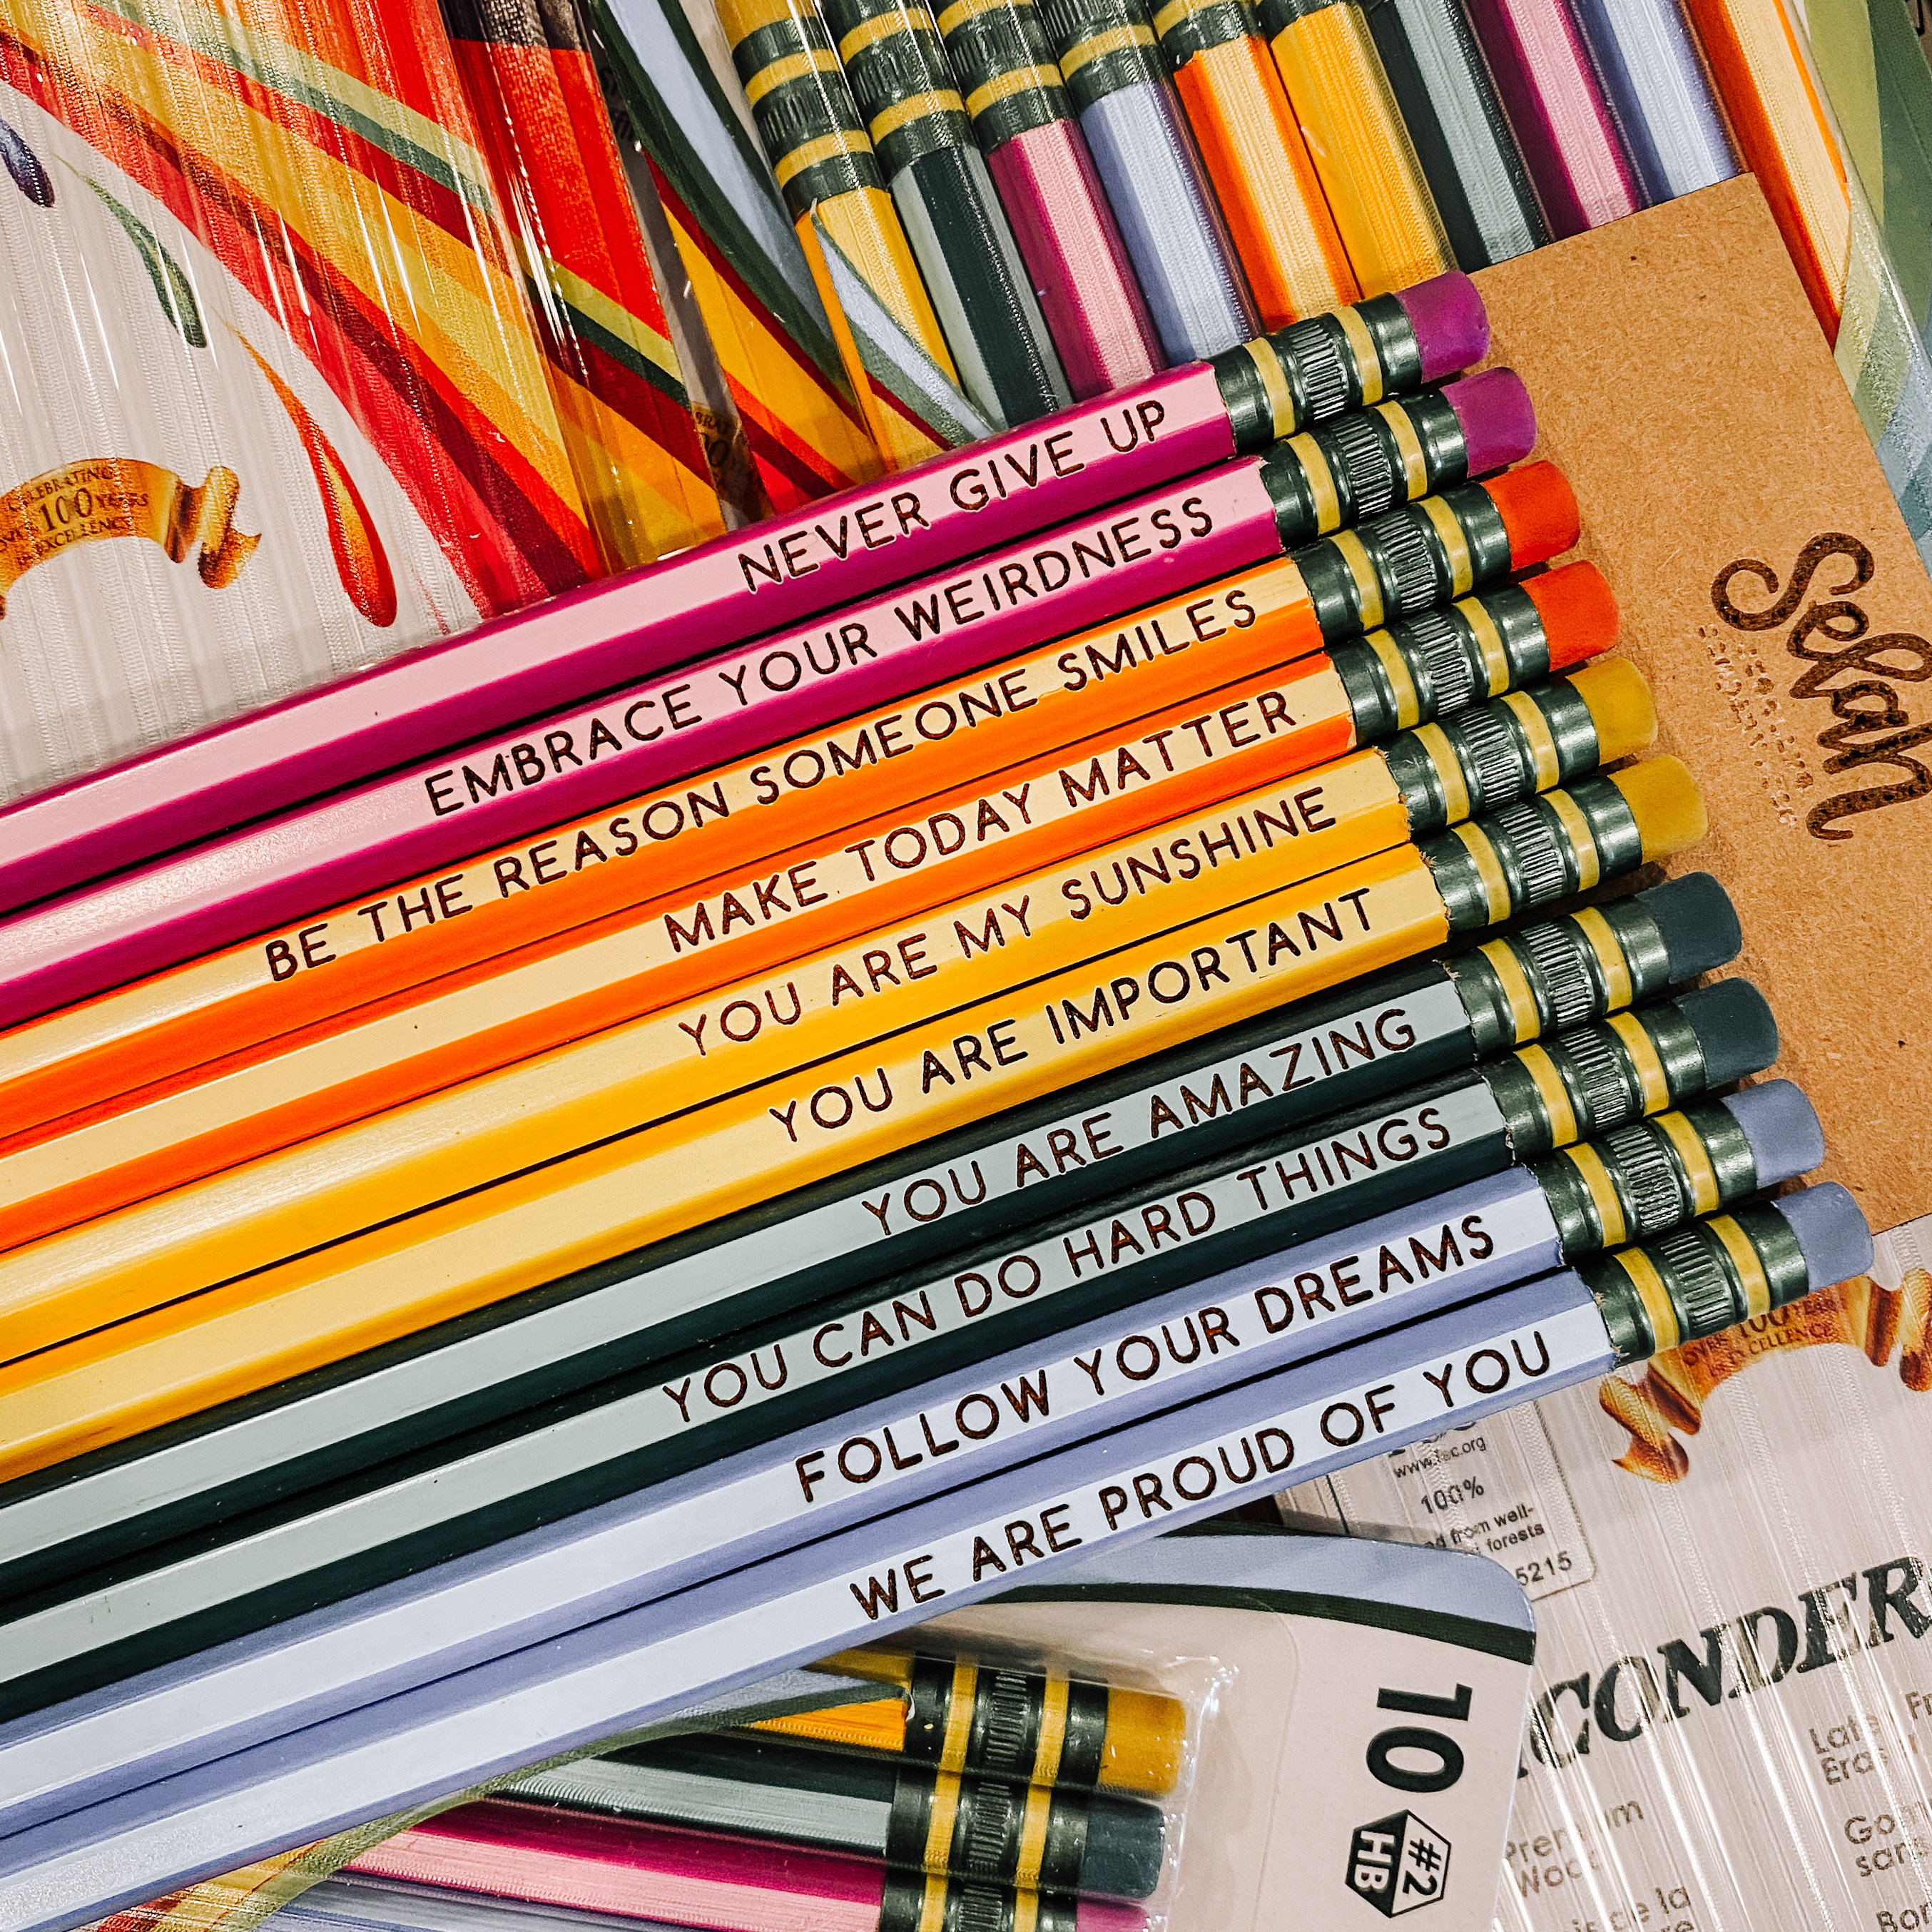 Cuhas Affirmation Pencil Set, Inspirational Pencils, Personalized